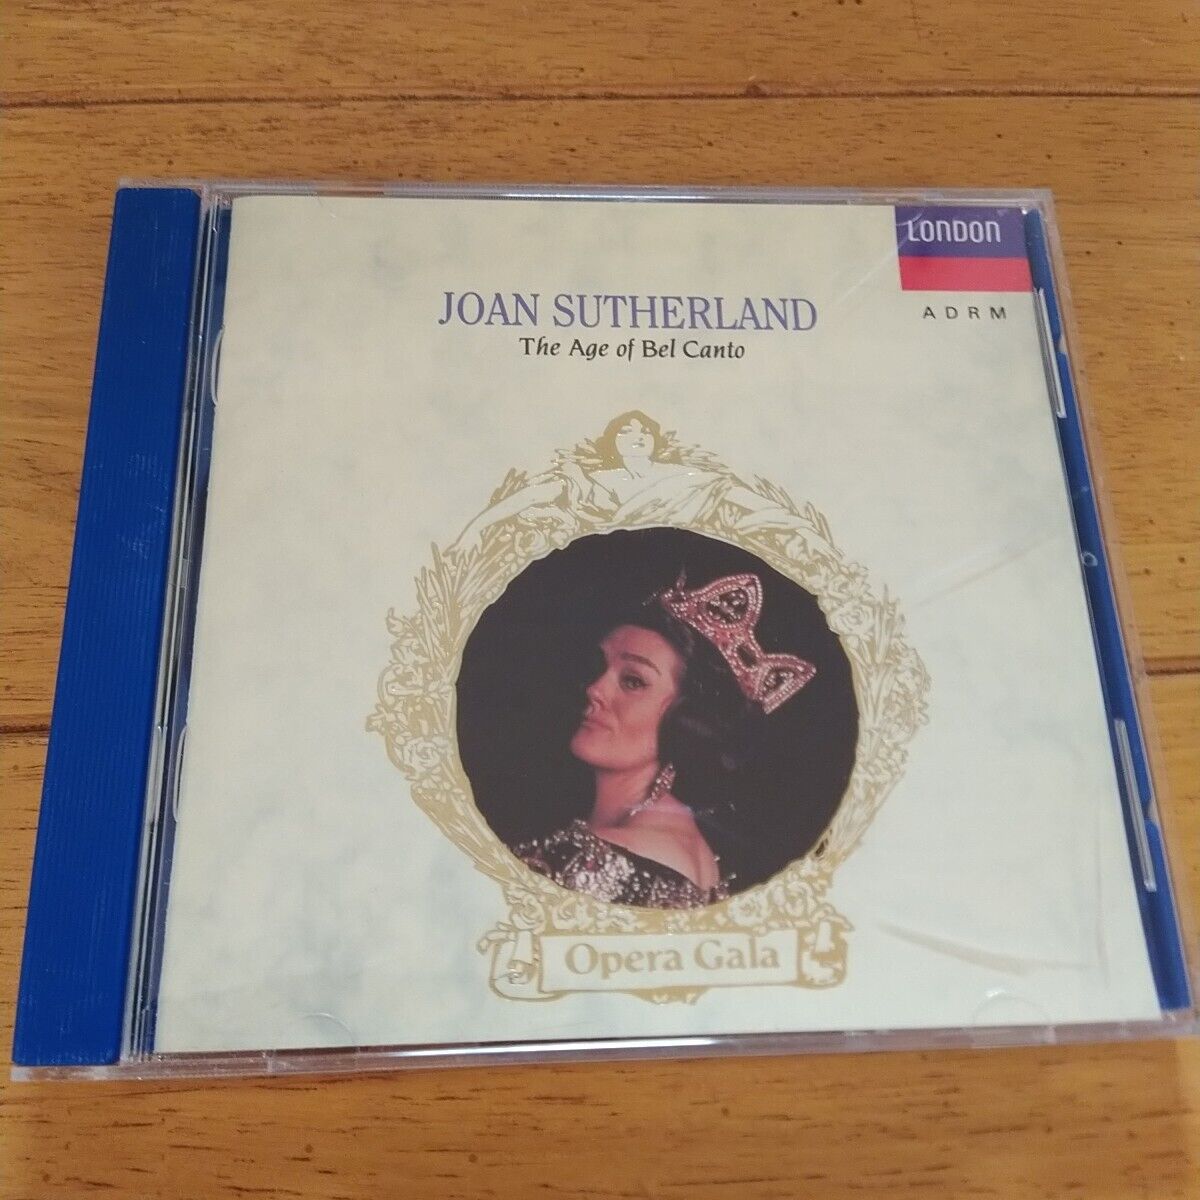 Joan Sutherland The Age of Bel Canto CD Richard Bonynge Opera Gala